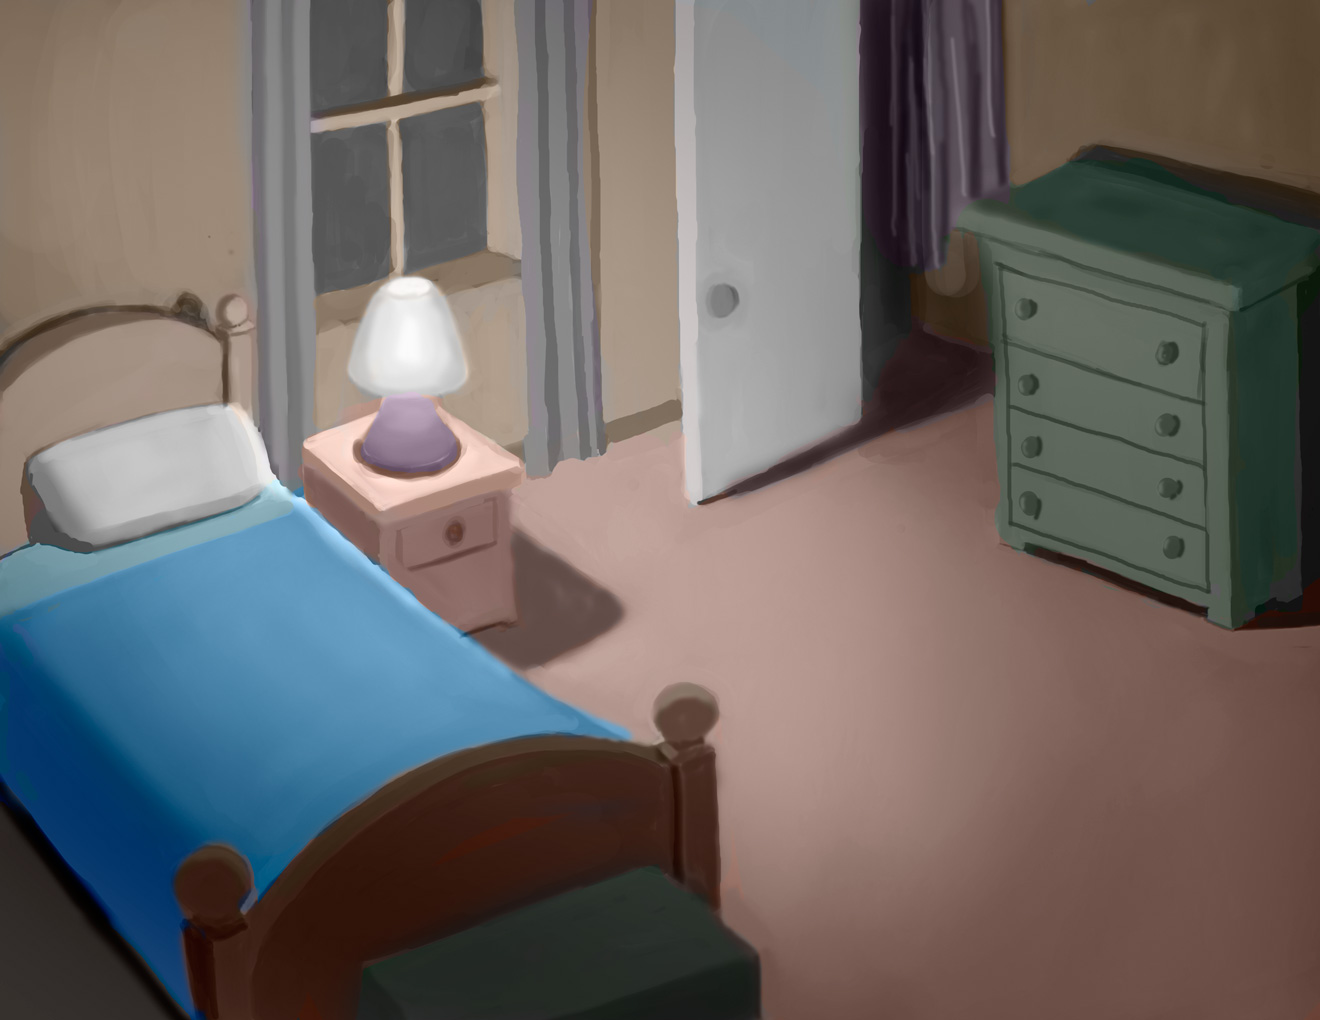 Practice_RoomLight-2pt3-lamp-nicka-adding-color-.jpg